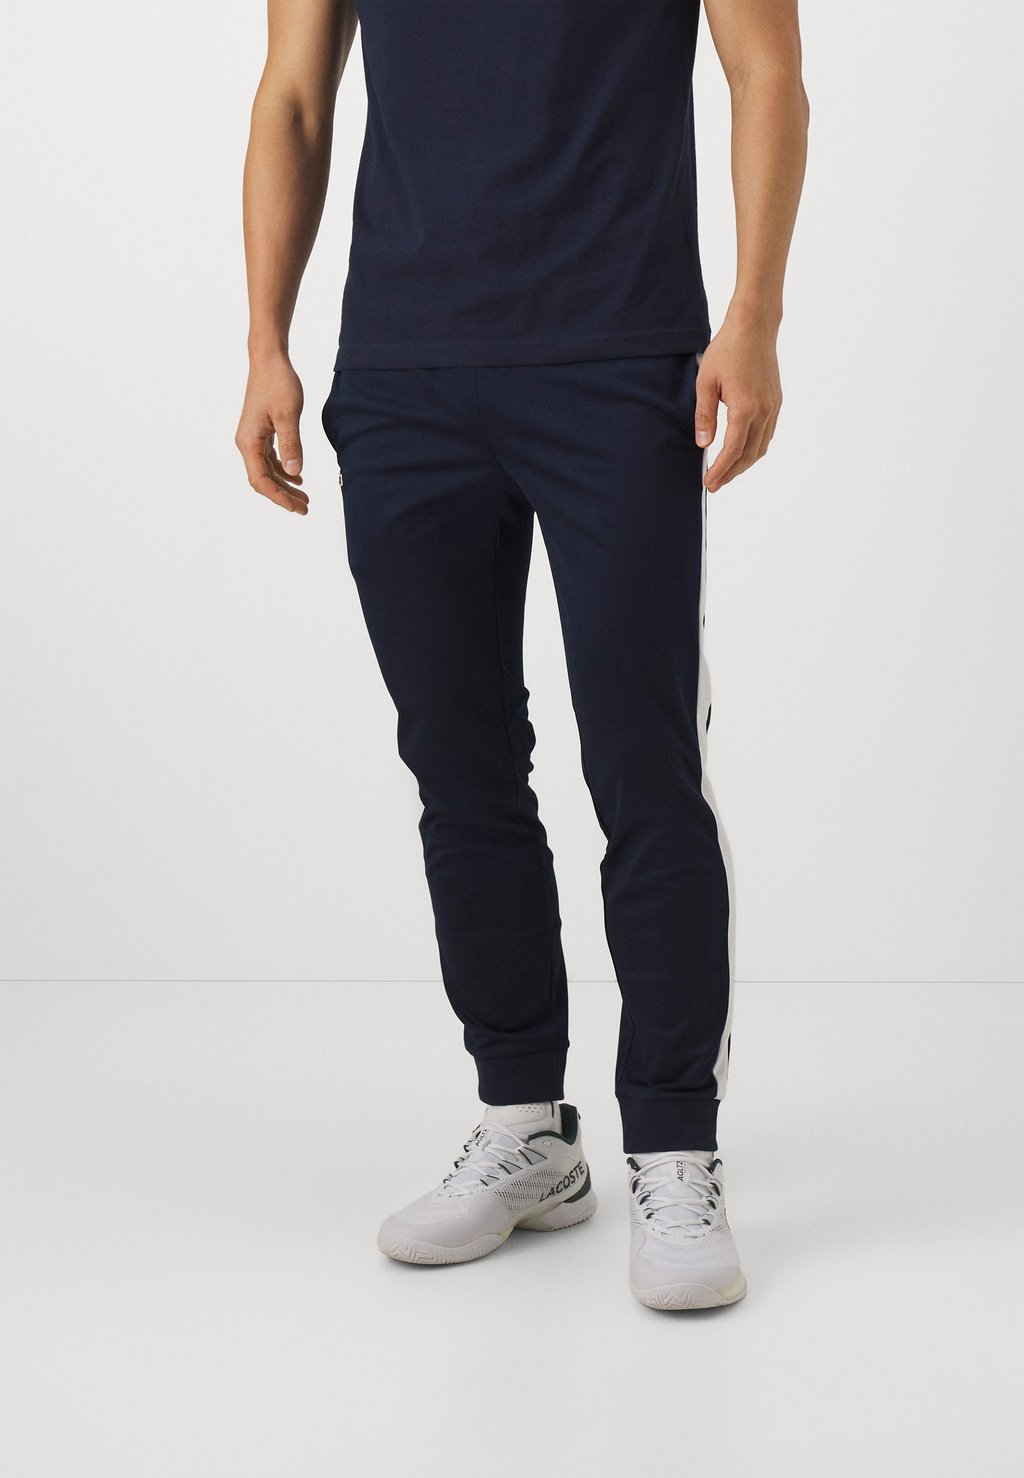 Спортивные брюки Trousers Tc Lacoste, цвет navy blue/white спортивные шорты shorts tc lacoste цвет phoenix blue navy blue